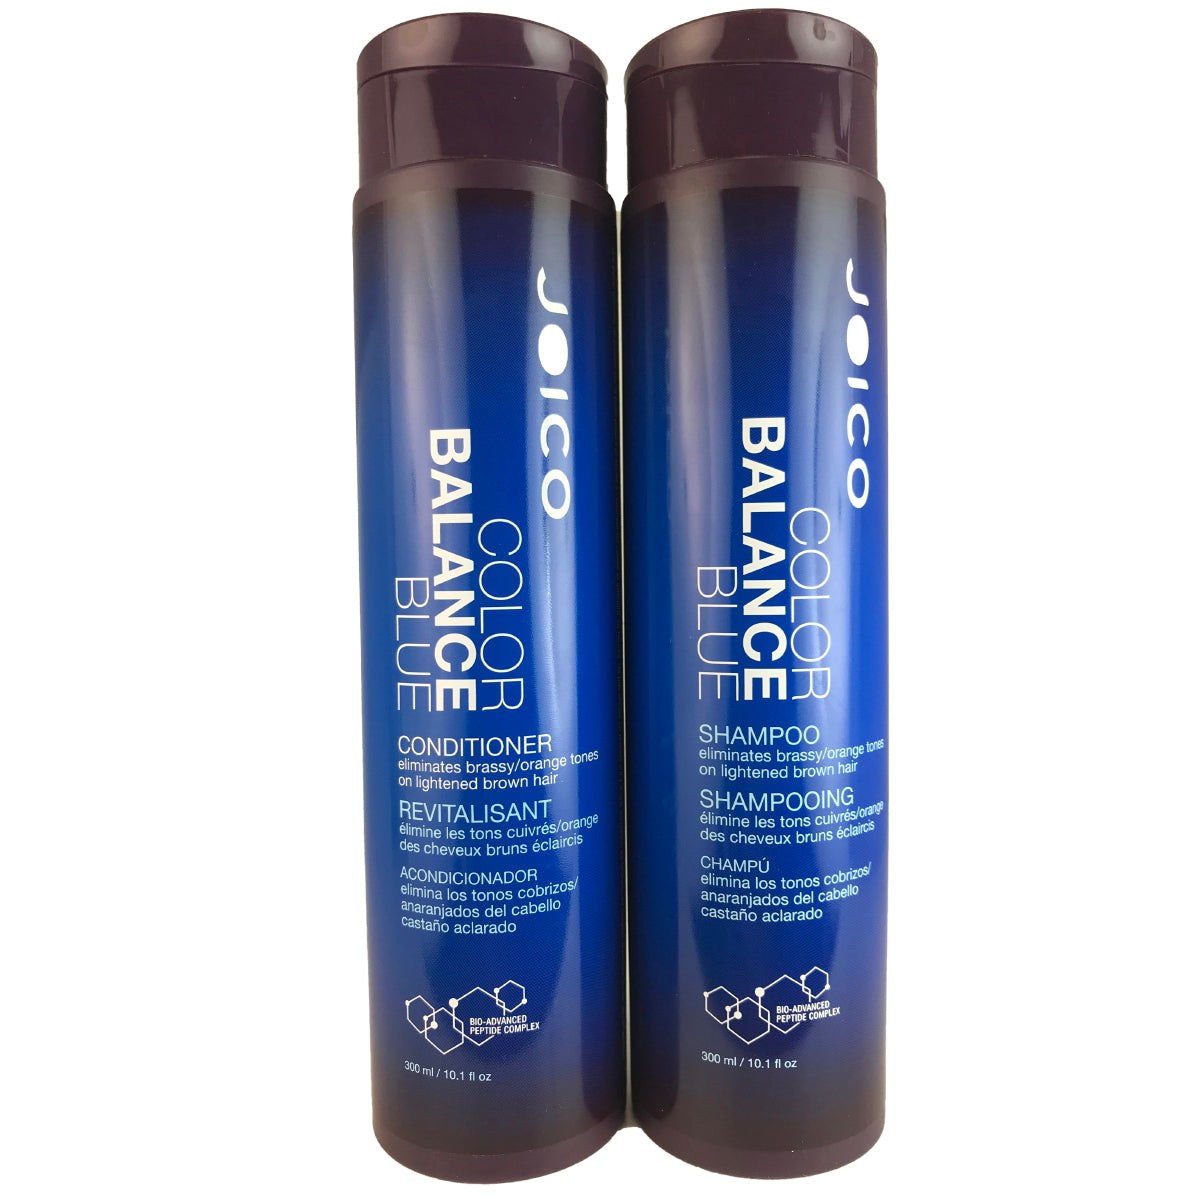 JOICO Color Balance Blue Shampoo & Conditioner Duo 10.1 oz each Eliminates Brassy/Orange Tones on lightened Brown Hair